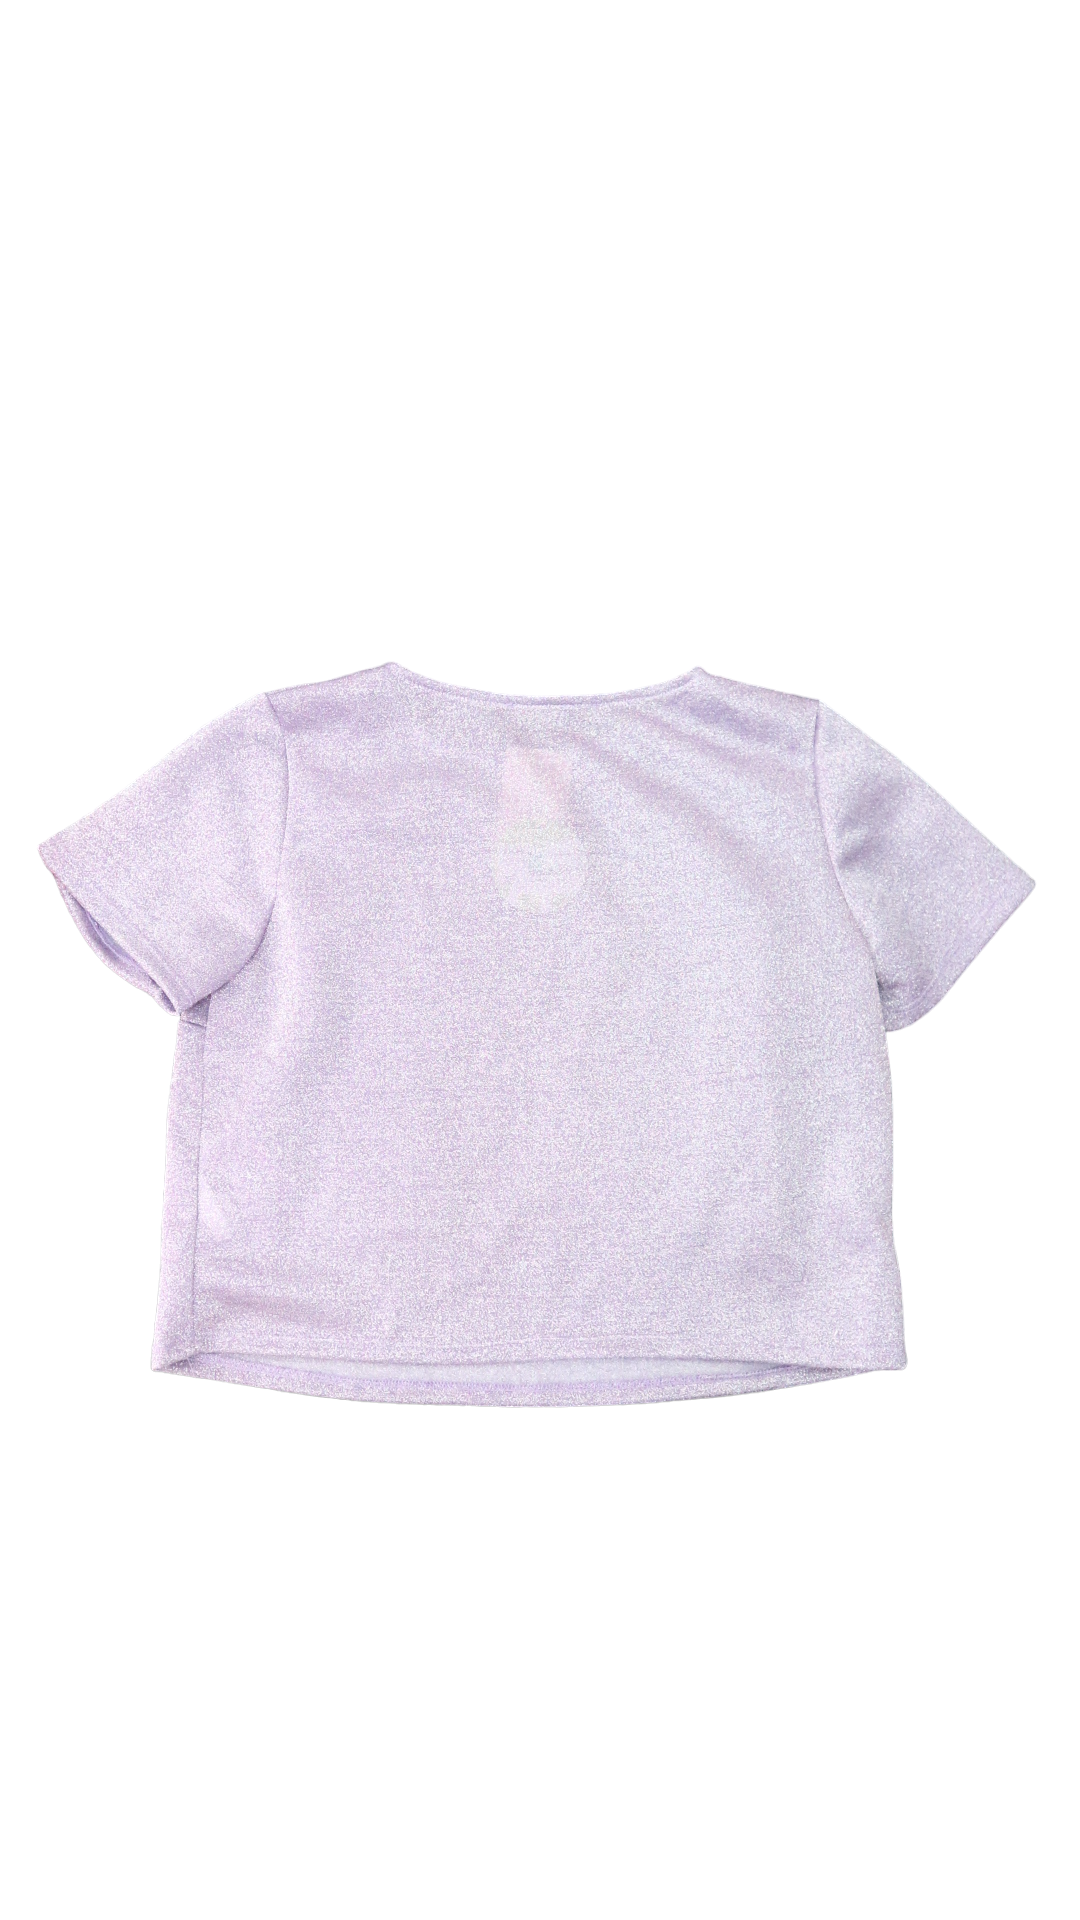 Jaded Rose Maternity T-Shirt, Extra small/8